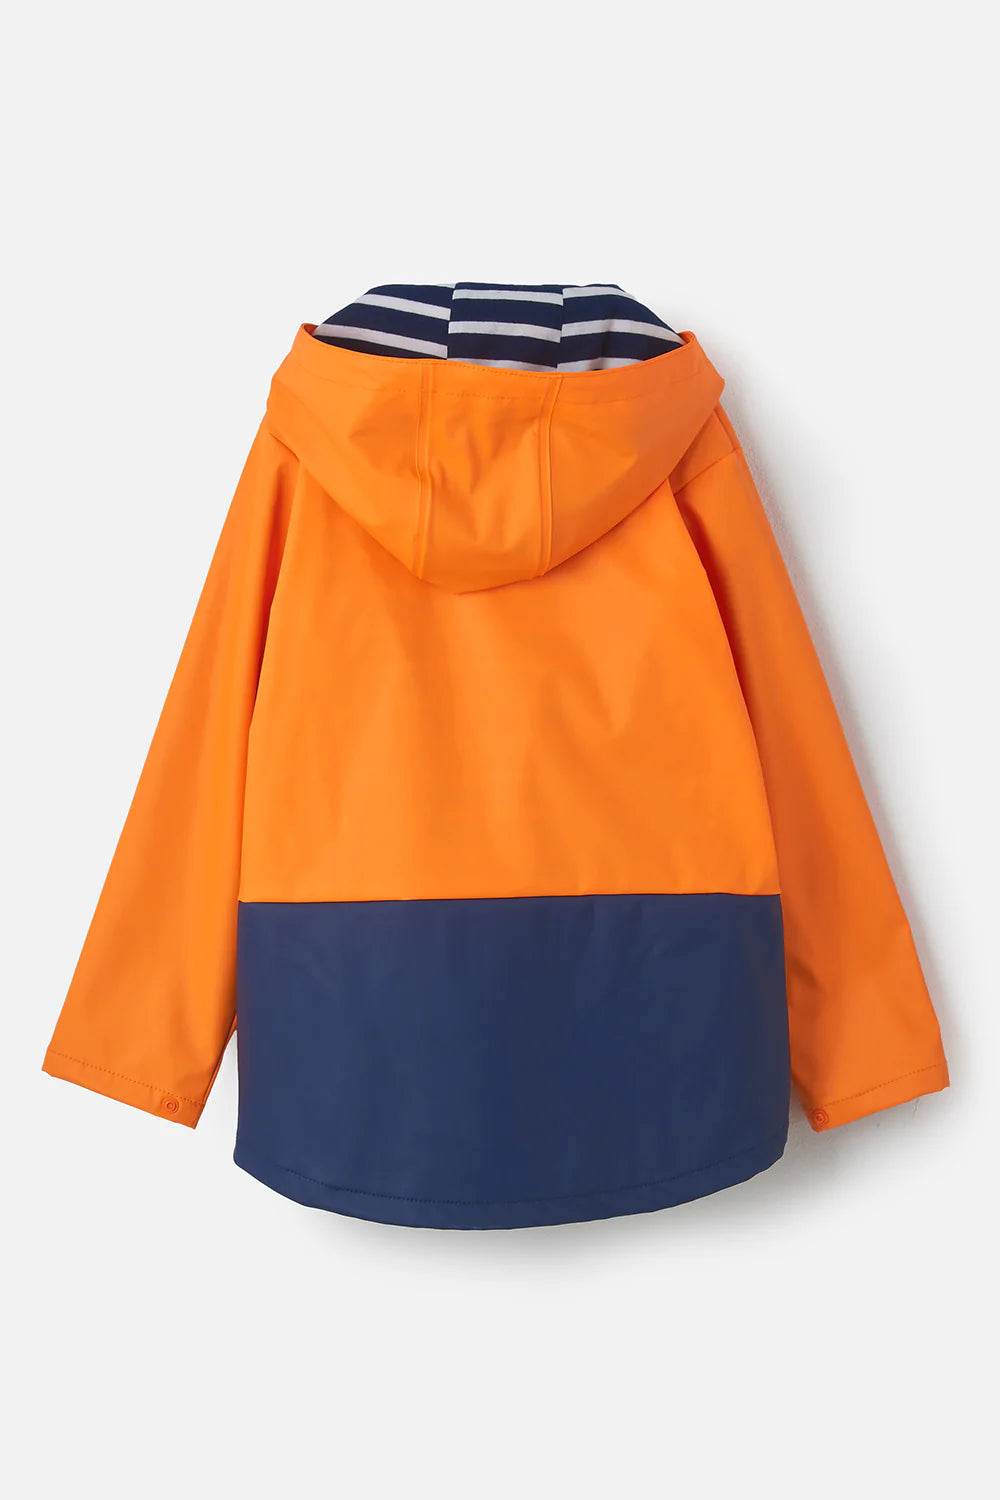 Lighthouse Kids 'Anchor' Waterproof Jacket -  Navy/Orange